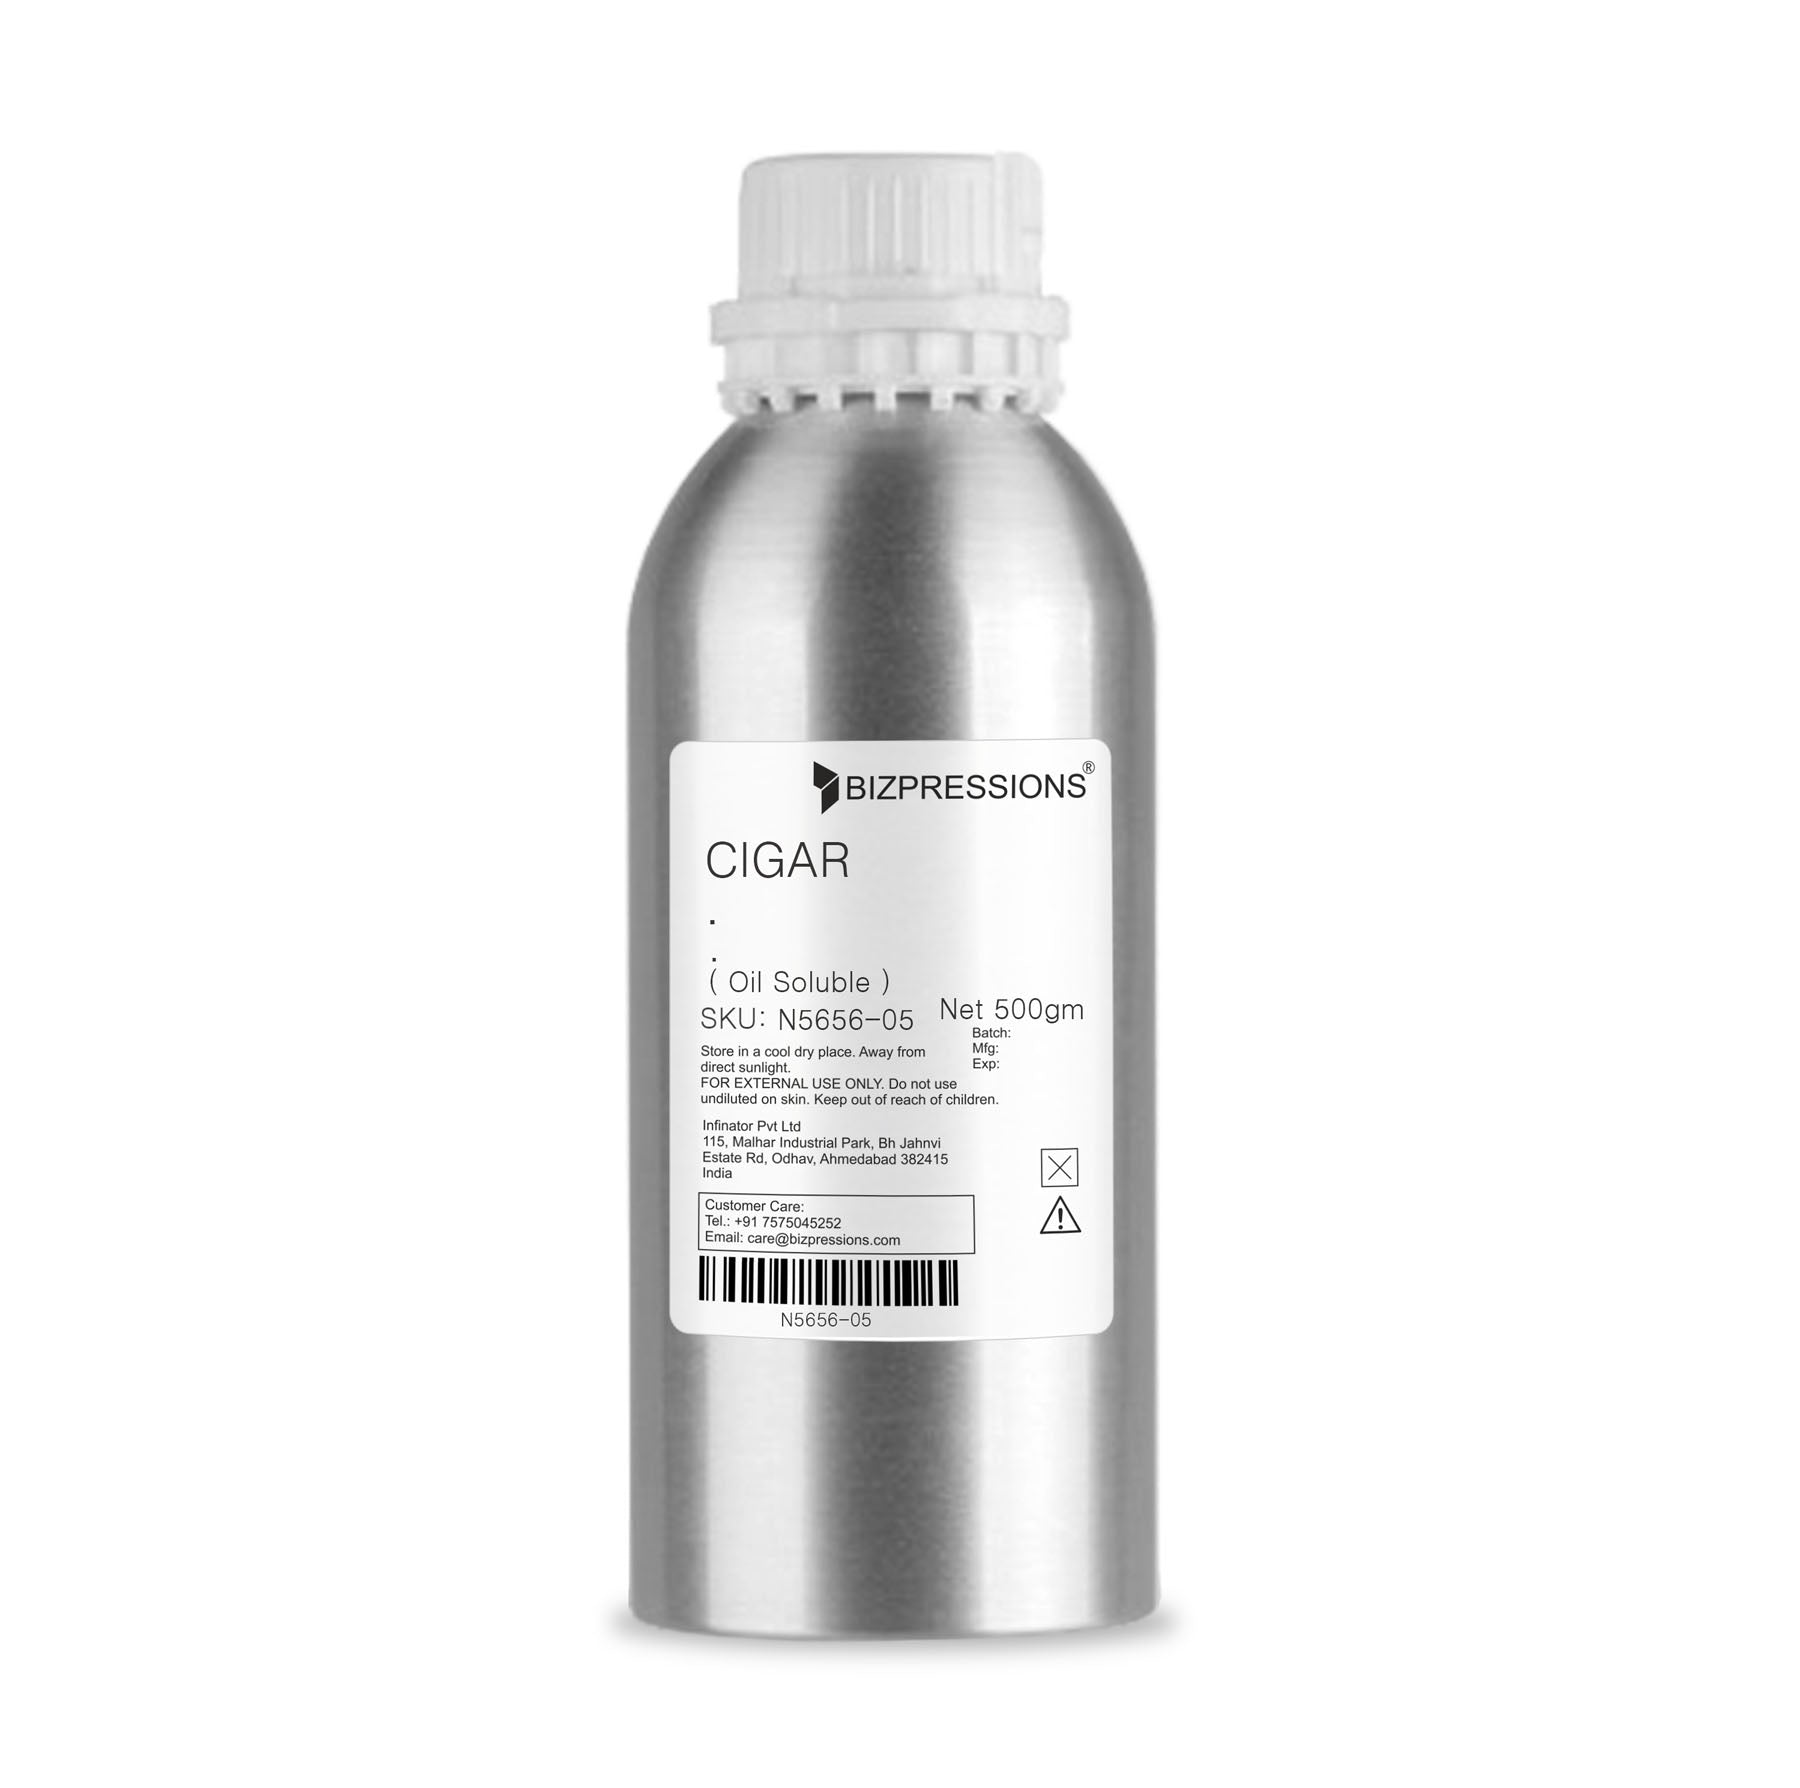 CIGAR - Fragrance ( Oil Soluble ) - 500 gm